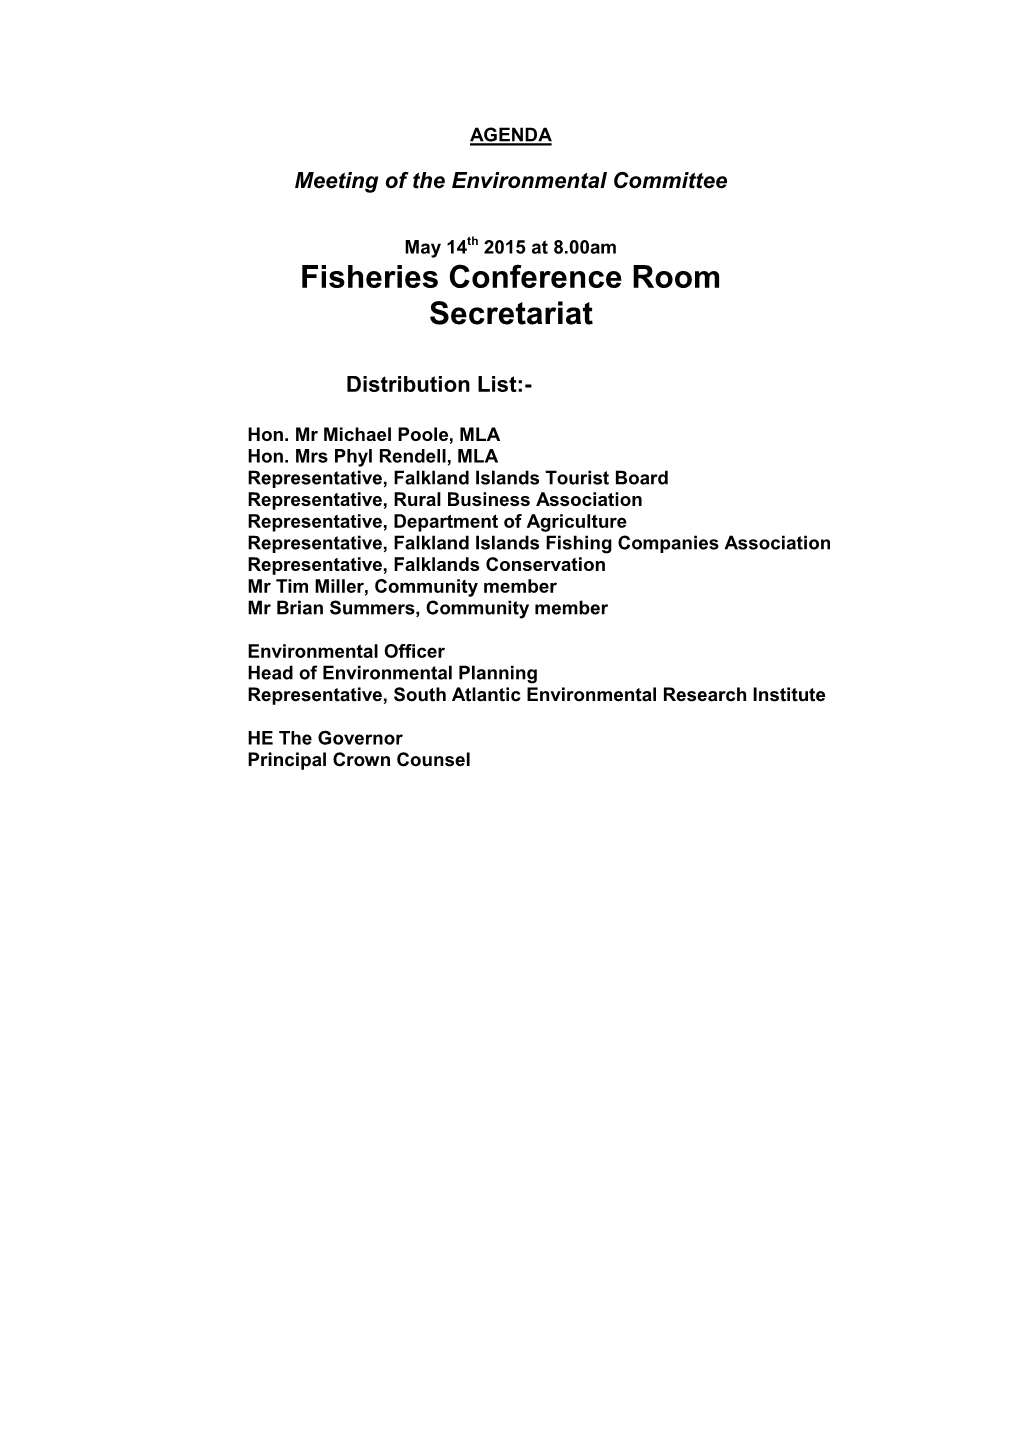 Environmental Committee Agenda 14.05.2015